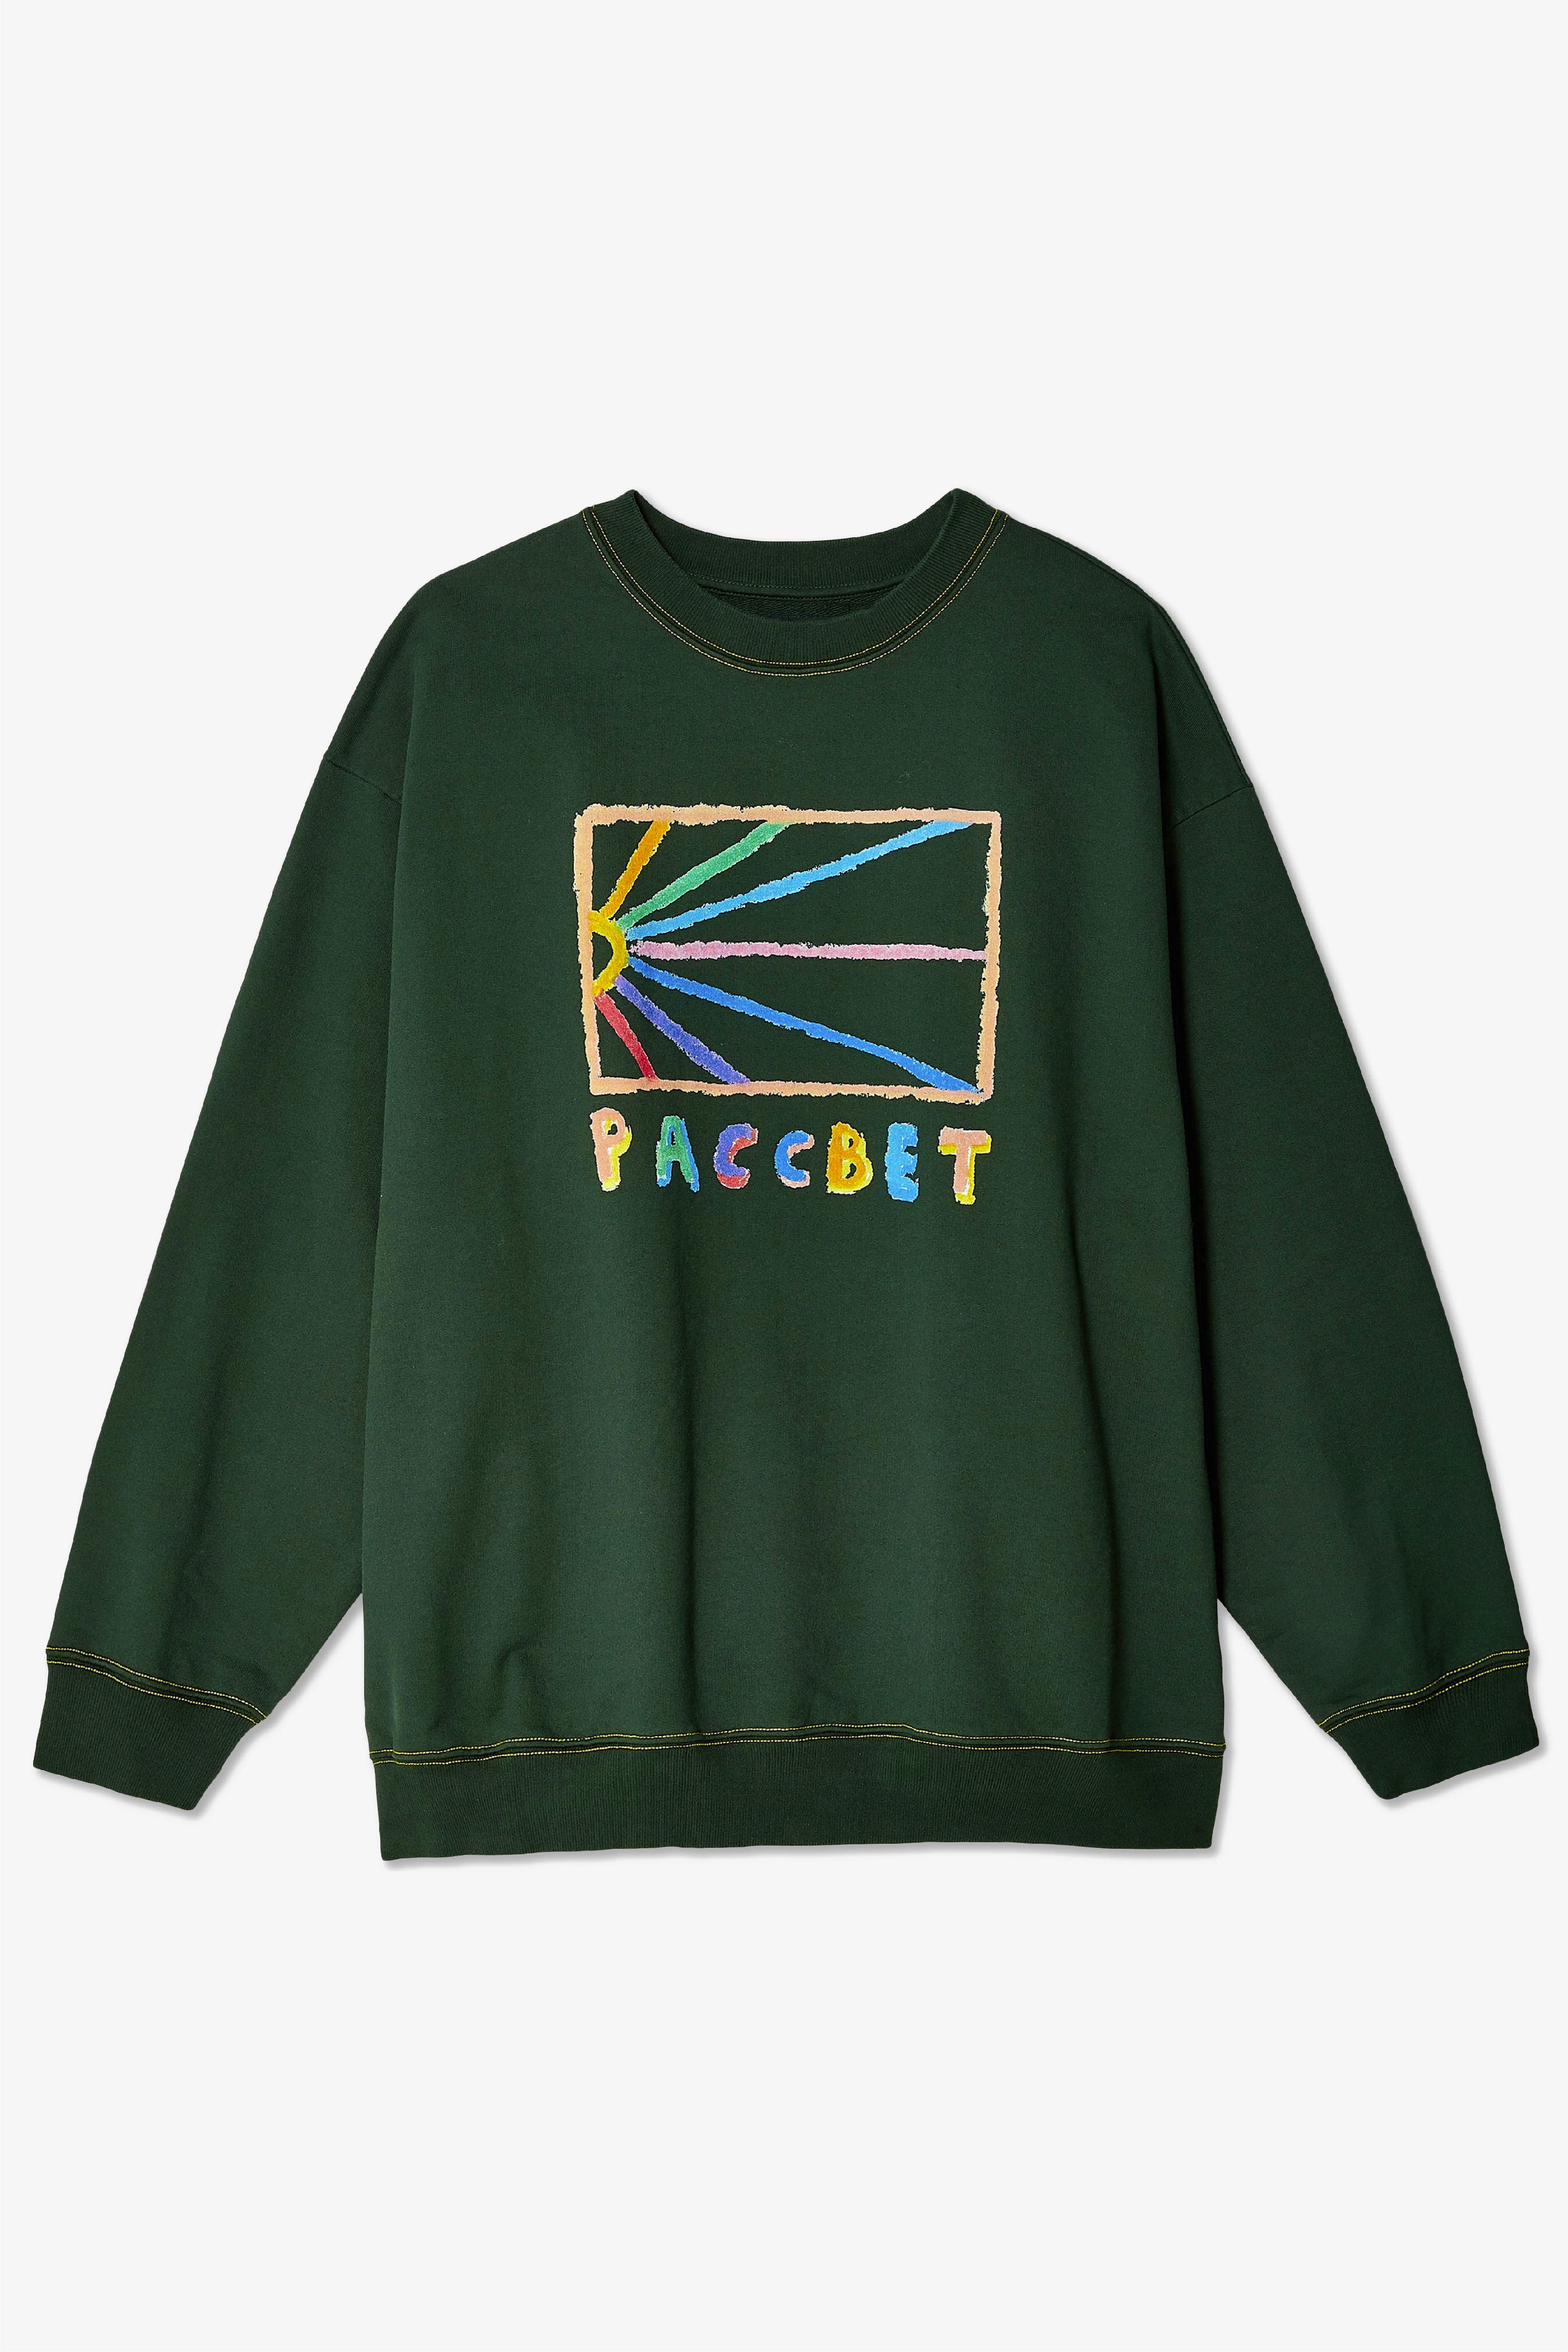 Selectshop FRAME - RASSVET Pastel Sweatshirt Sweats-knits Dubai